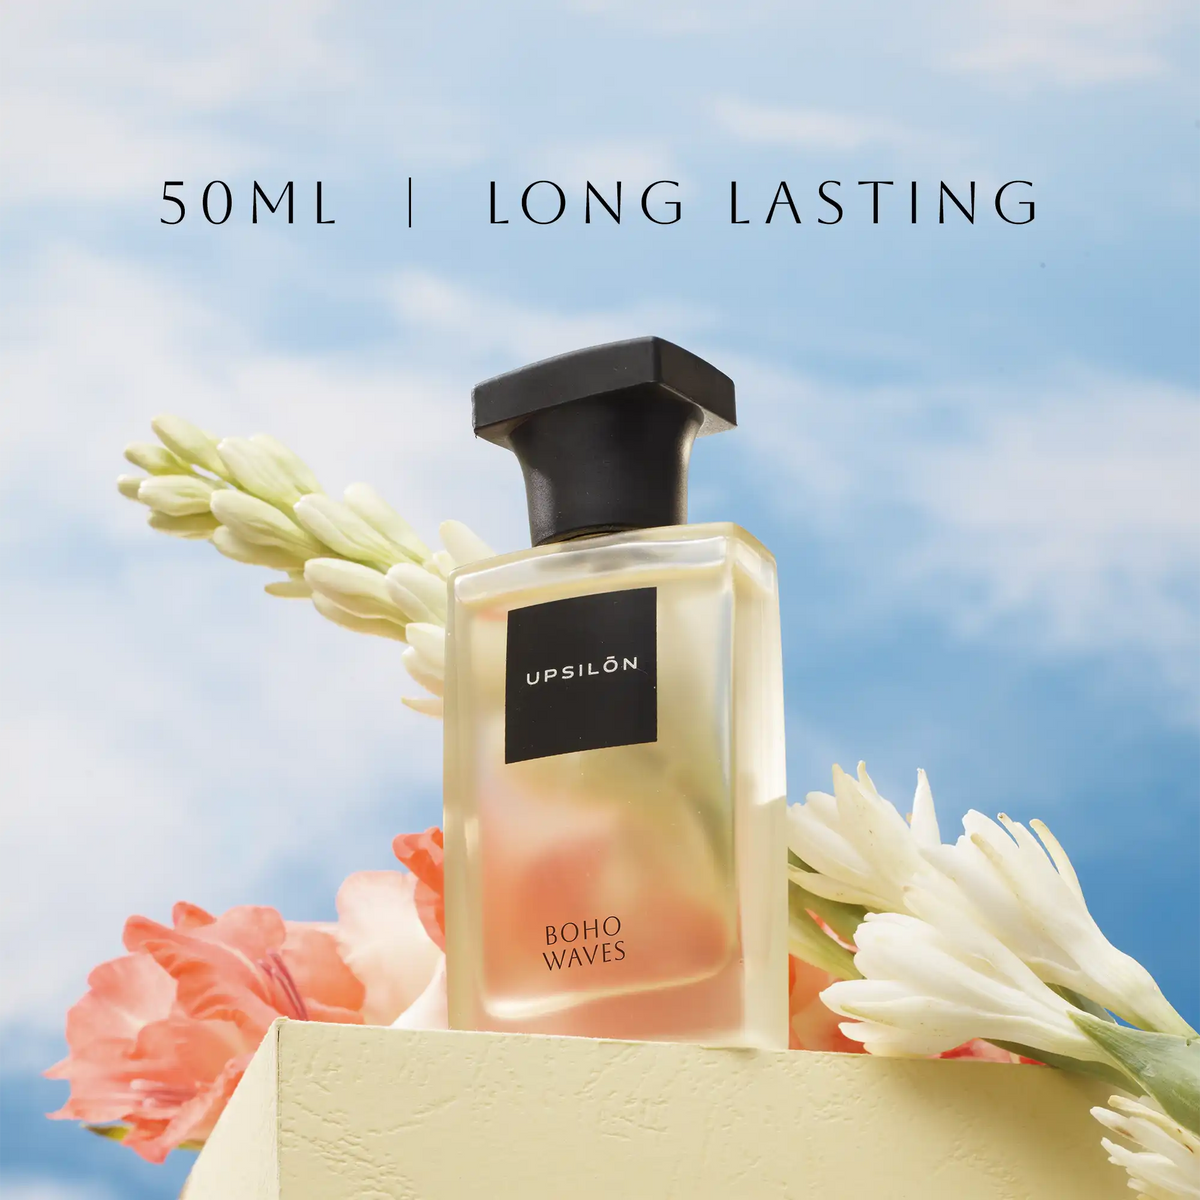 UPSILON Boho Waves Eau De Parfum for Women, 50ml long-lasting fragrance.